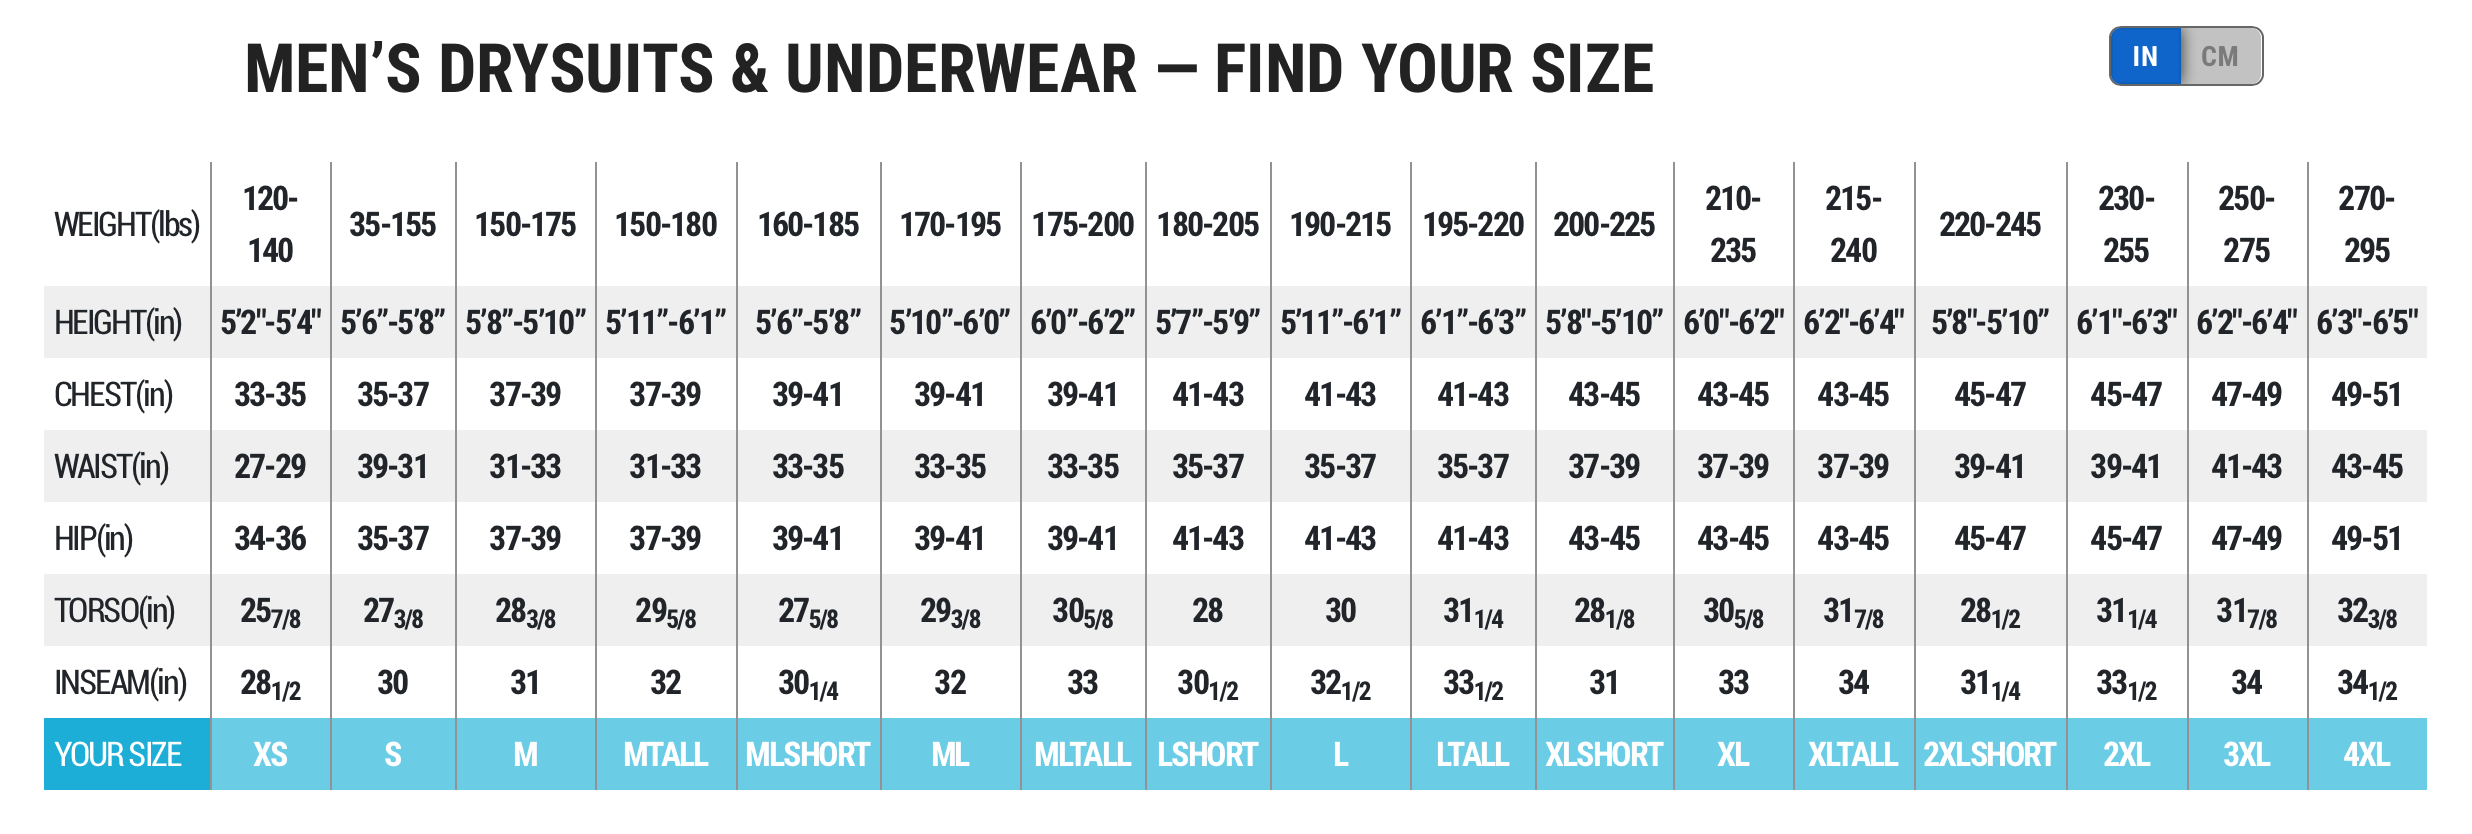 Size Chart for CT 200 Polarwear Undergarment